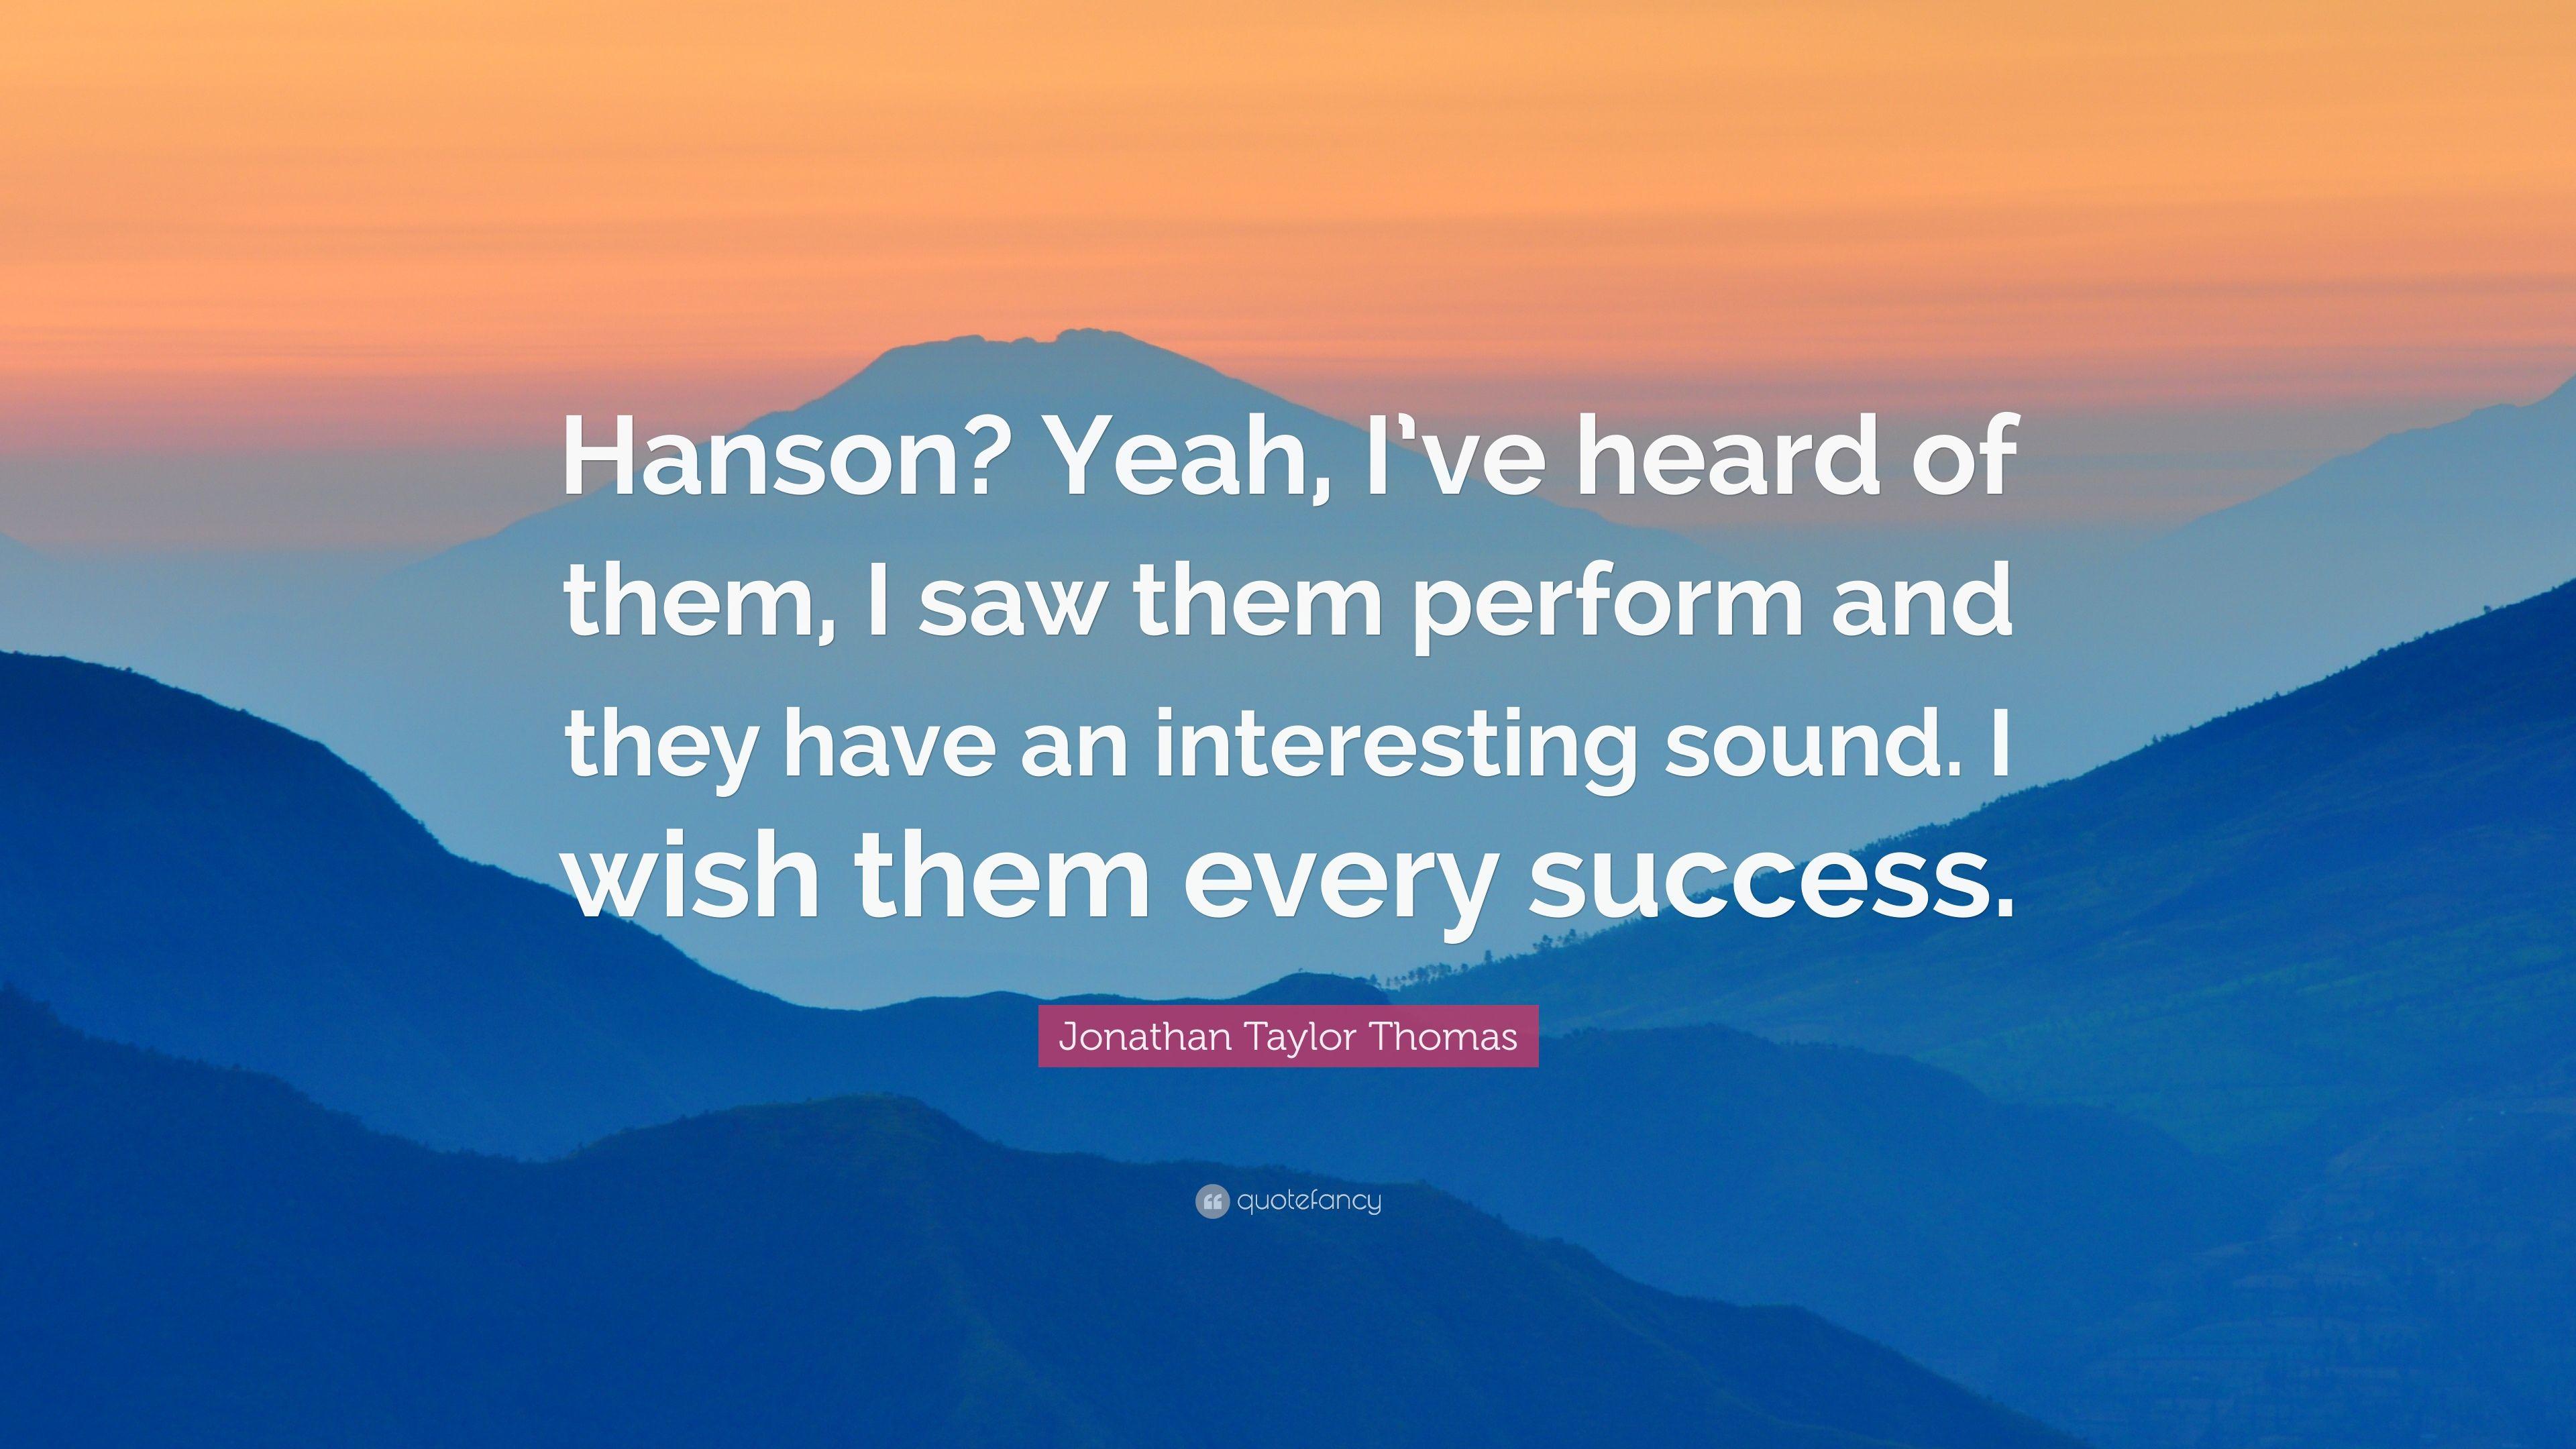 Jonathan Taylor Thomas Quote: “Hanson? Yeah, I've heard of them, I